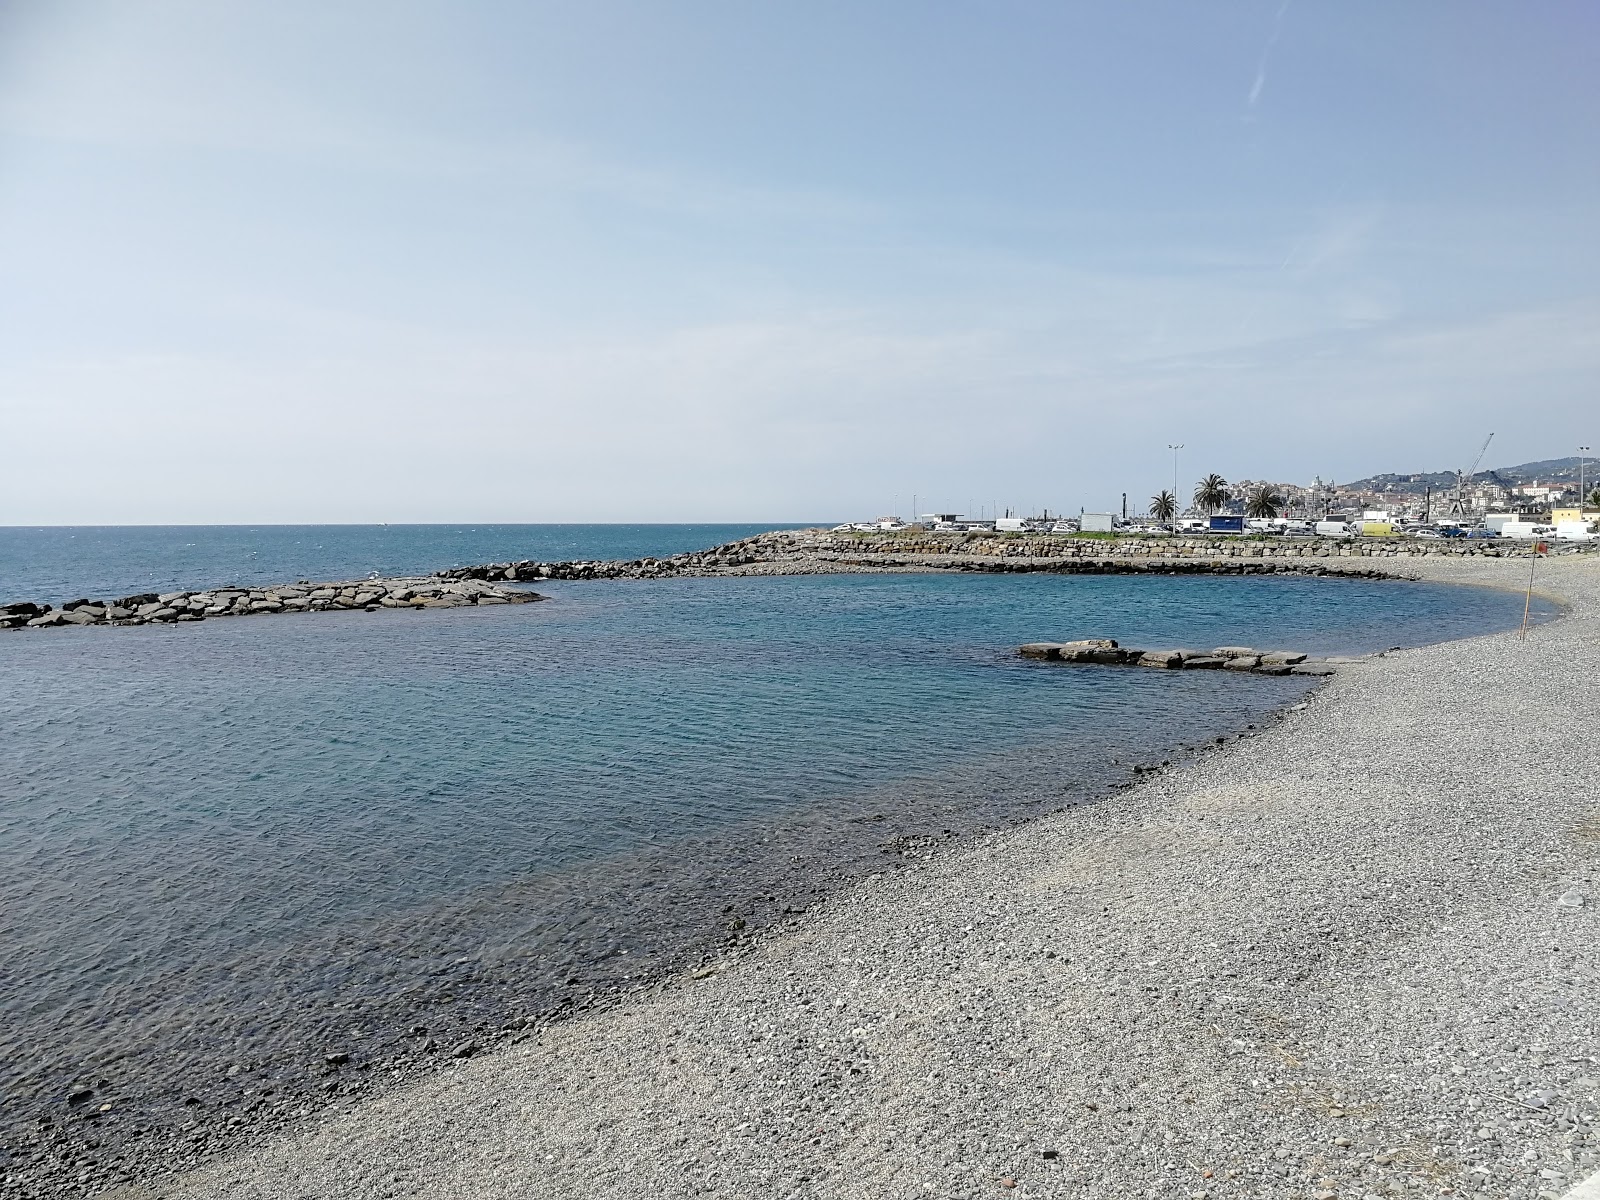 Foto de Spiaggia Sogni d'estate com pebble fina cinza superfície